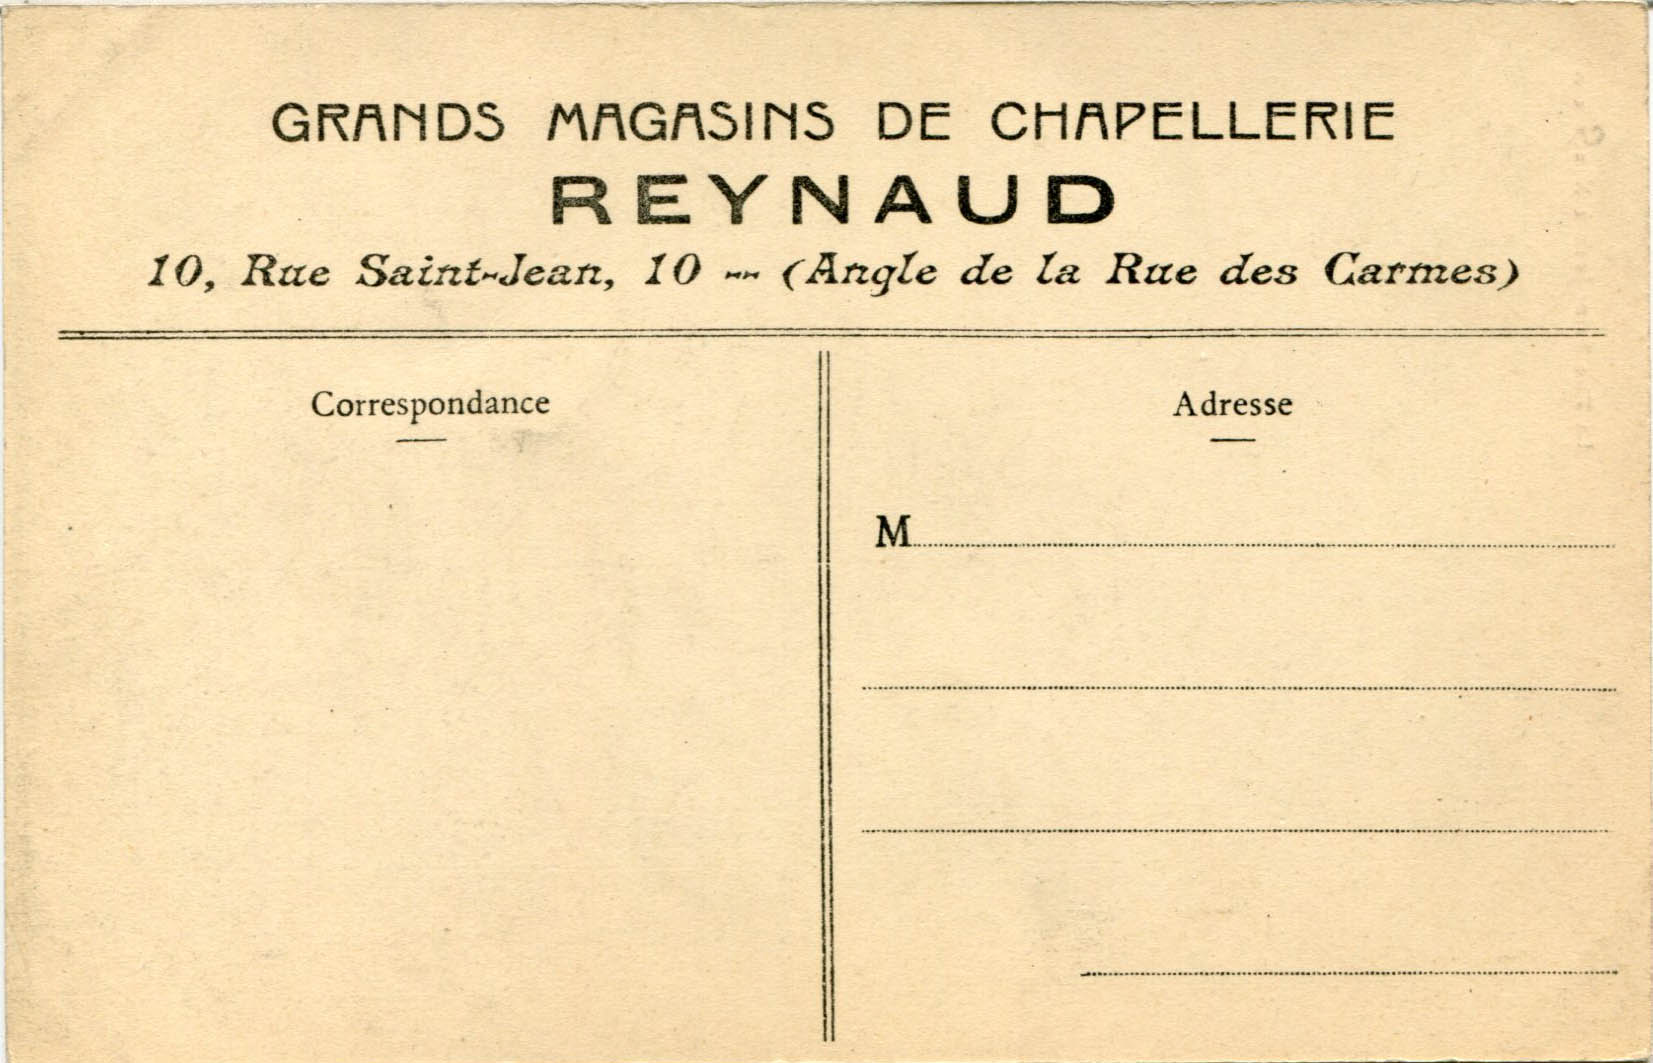 Chapellerie Reynaud - v